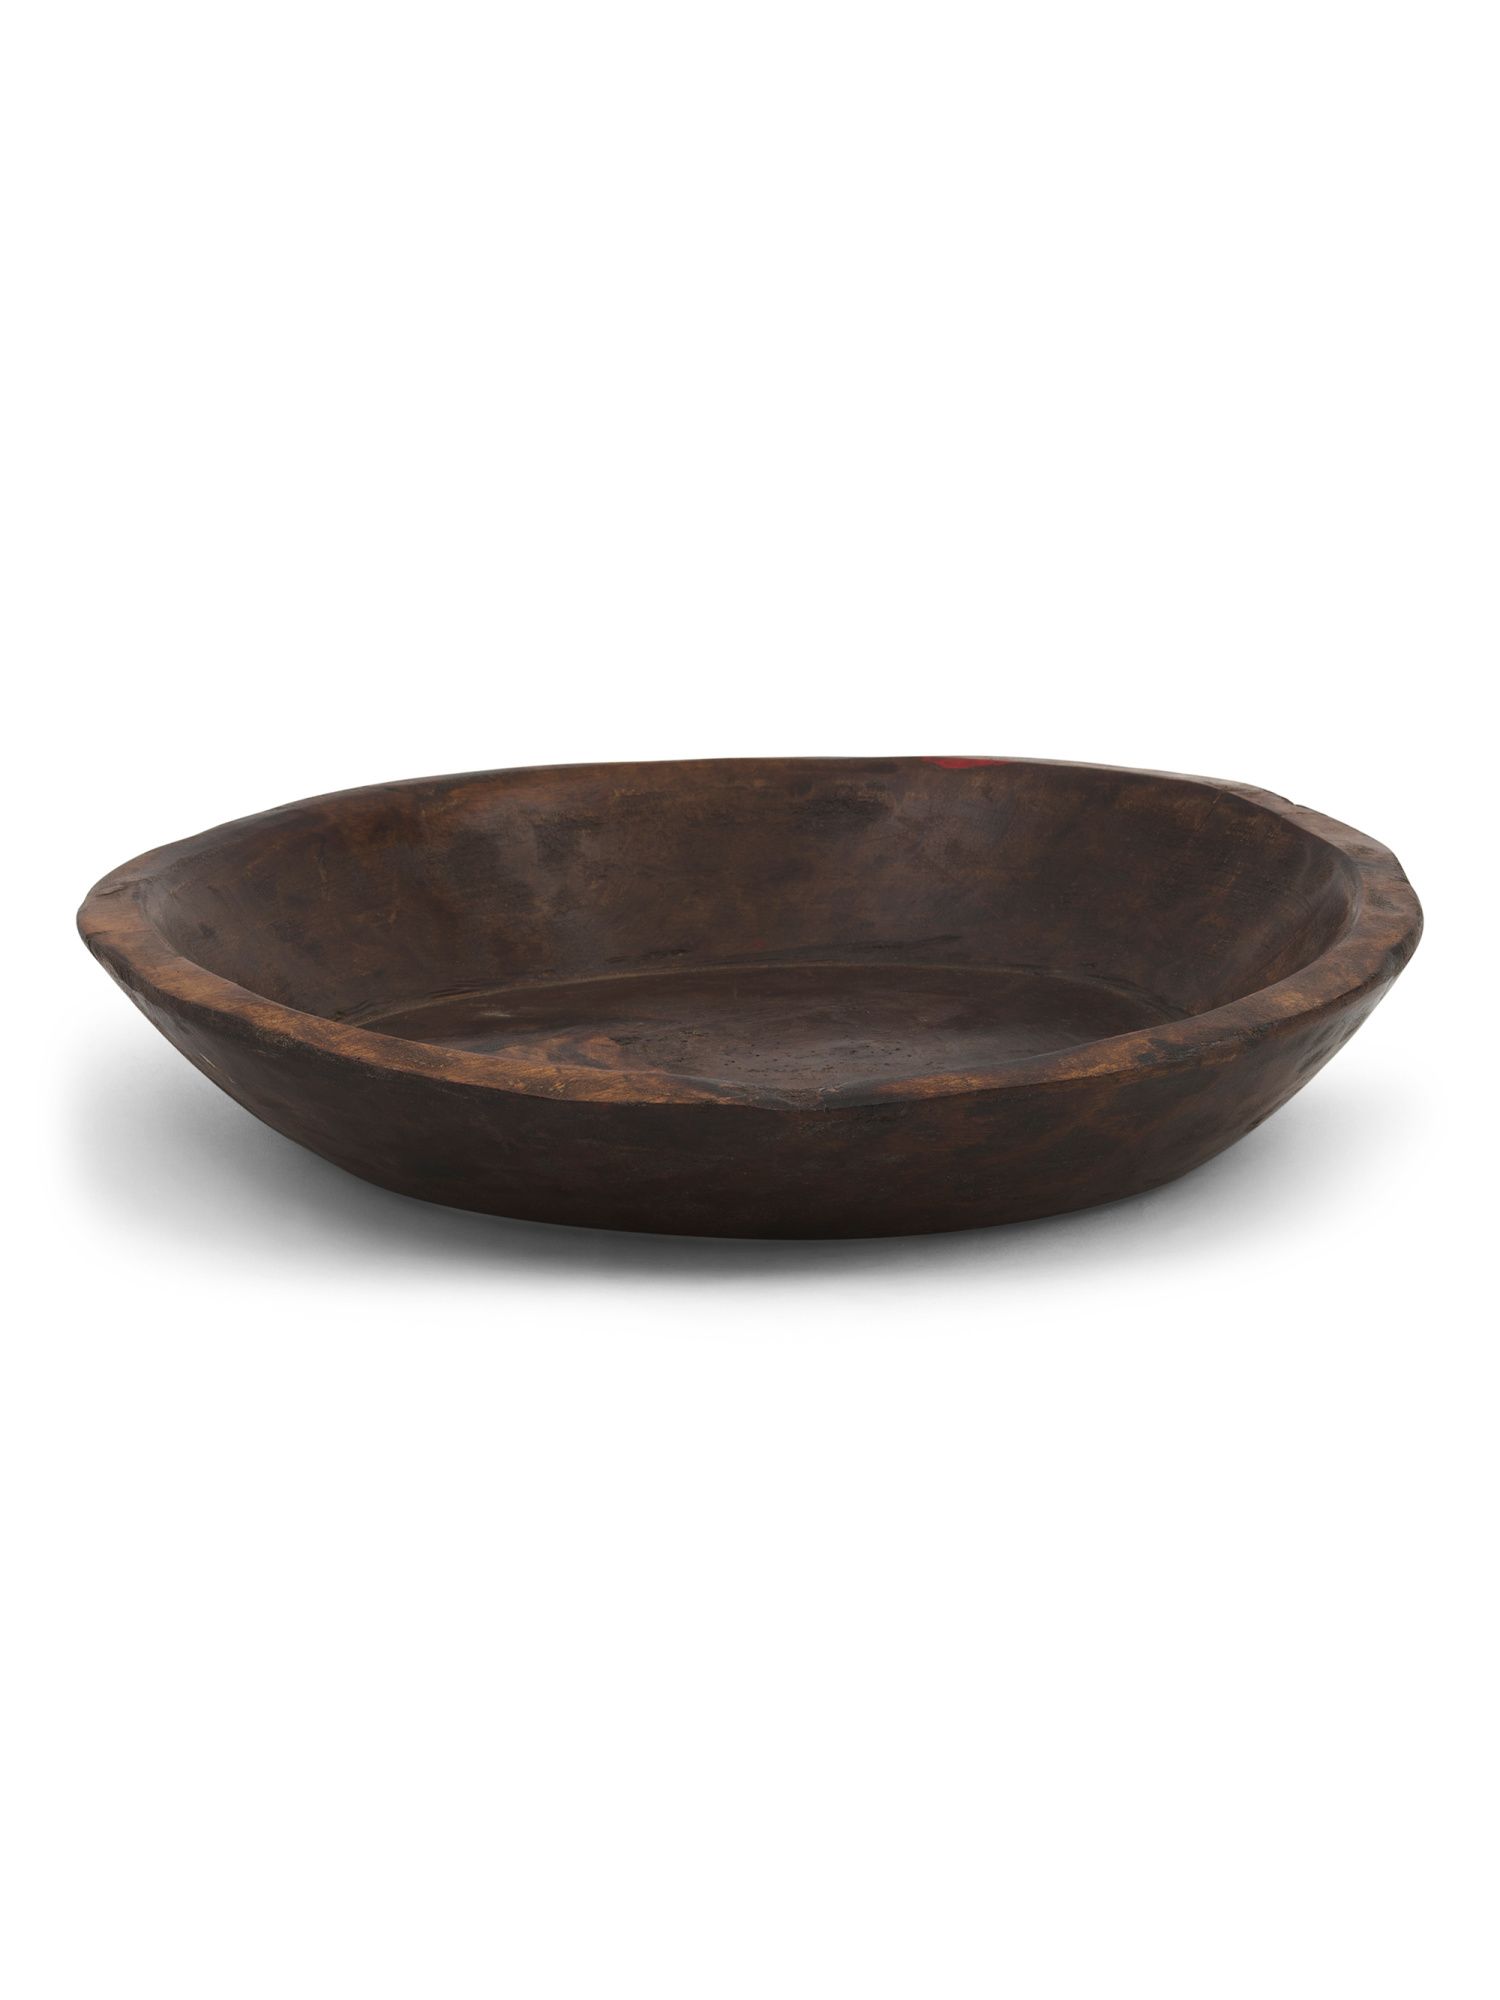 Wooden Decorative Bowl | TJ Maxx